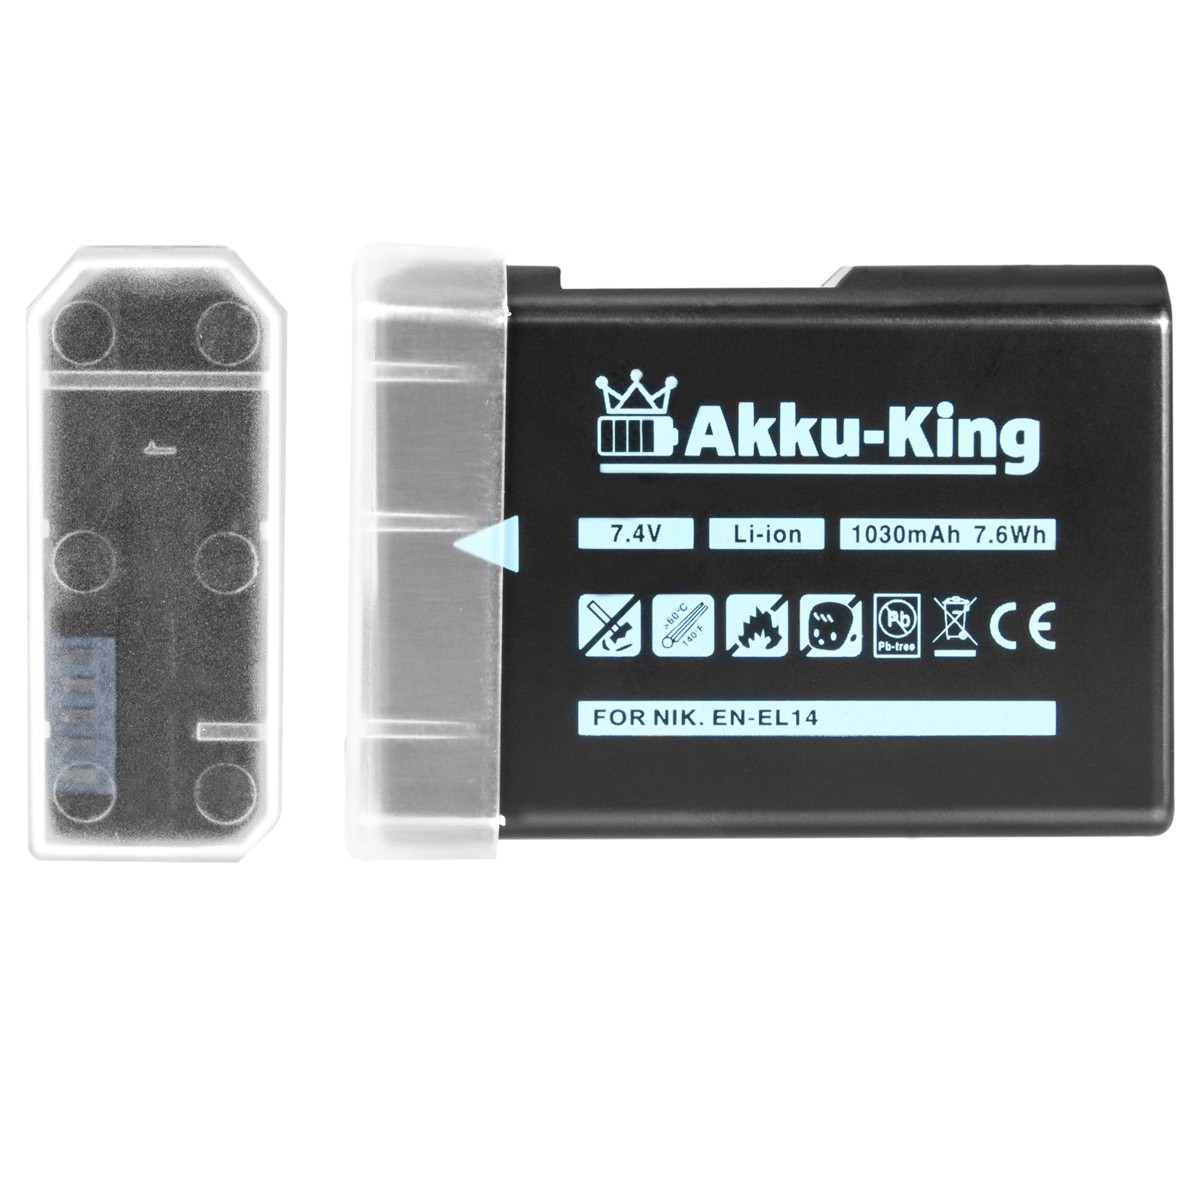 AKKU-KING Volt, EN-EL14 kompatibel 1030mAh Li-Ion 7.4 Nikon Akku mit Kamera-Akku,